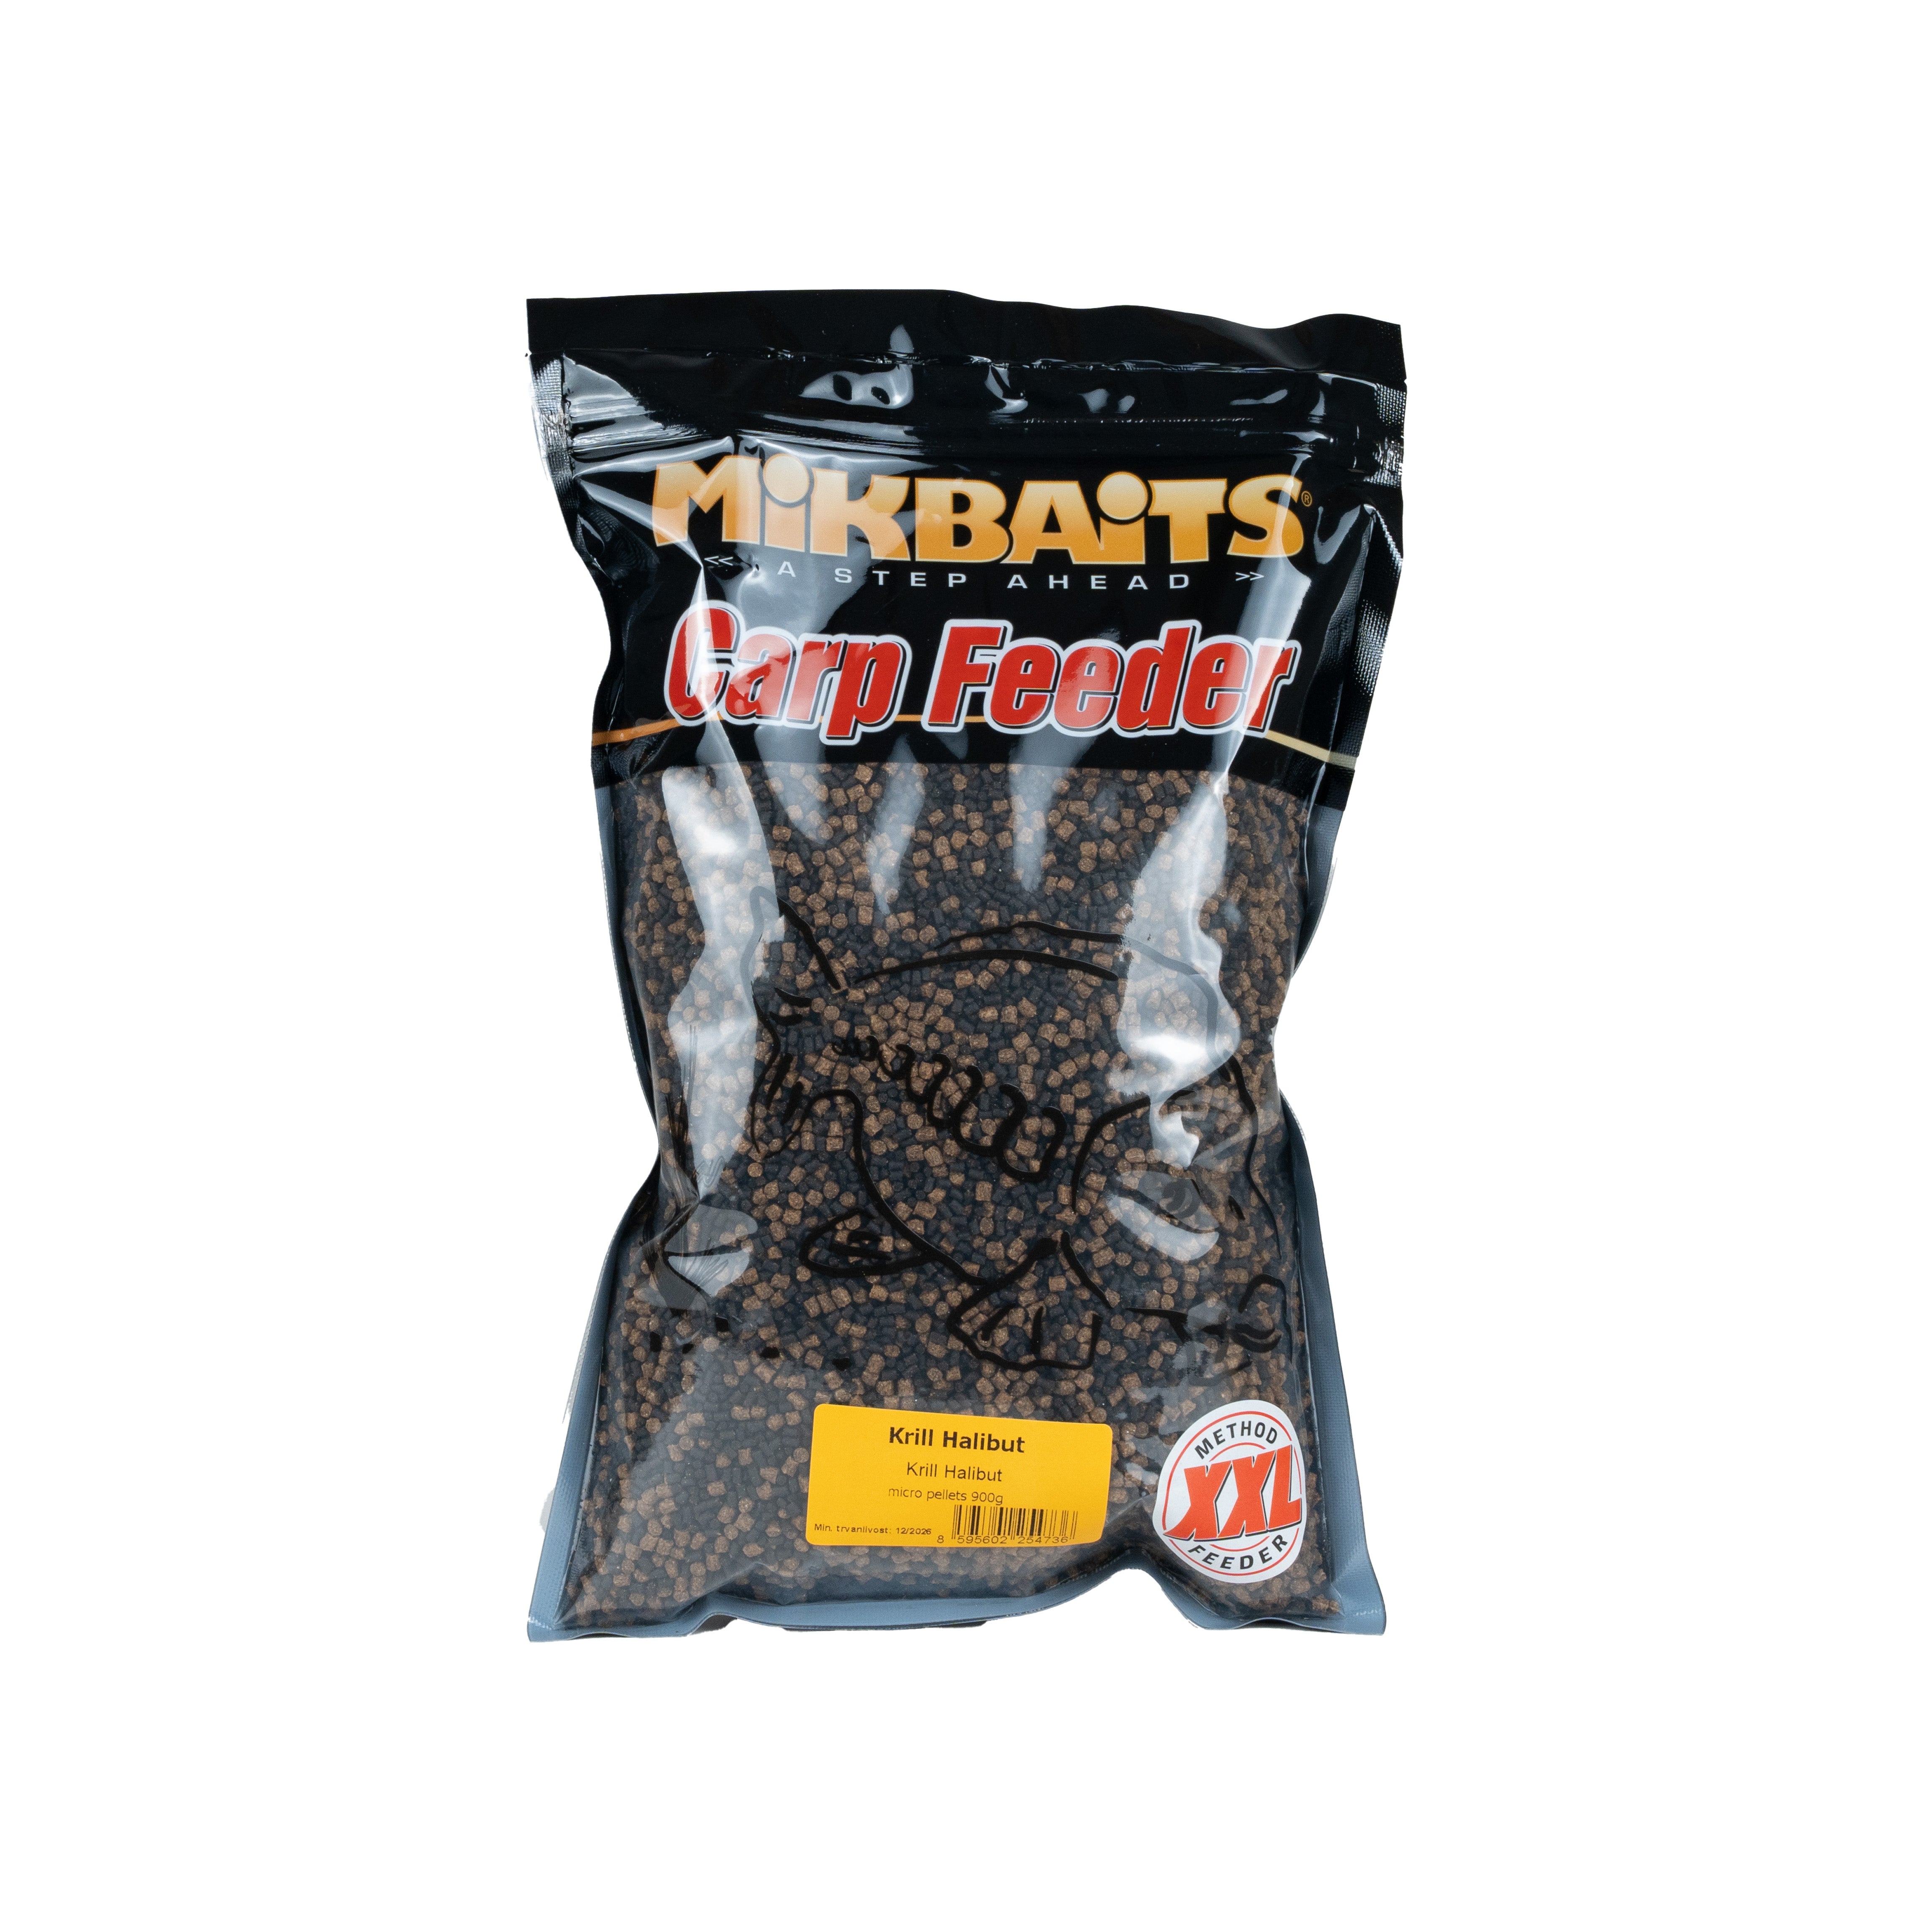 Mikbaits Method Feeder micro pellets 900g Krill Halibut